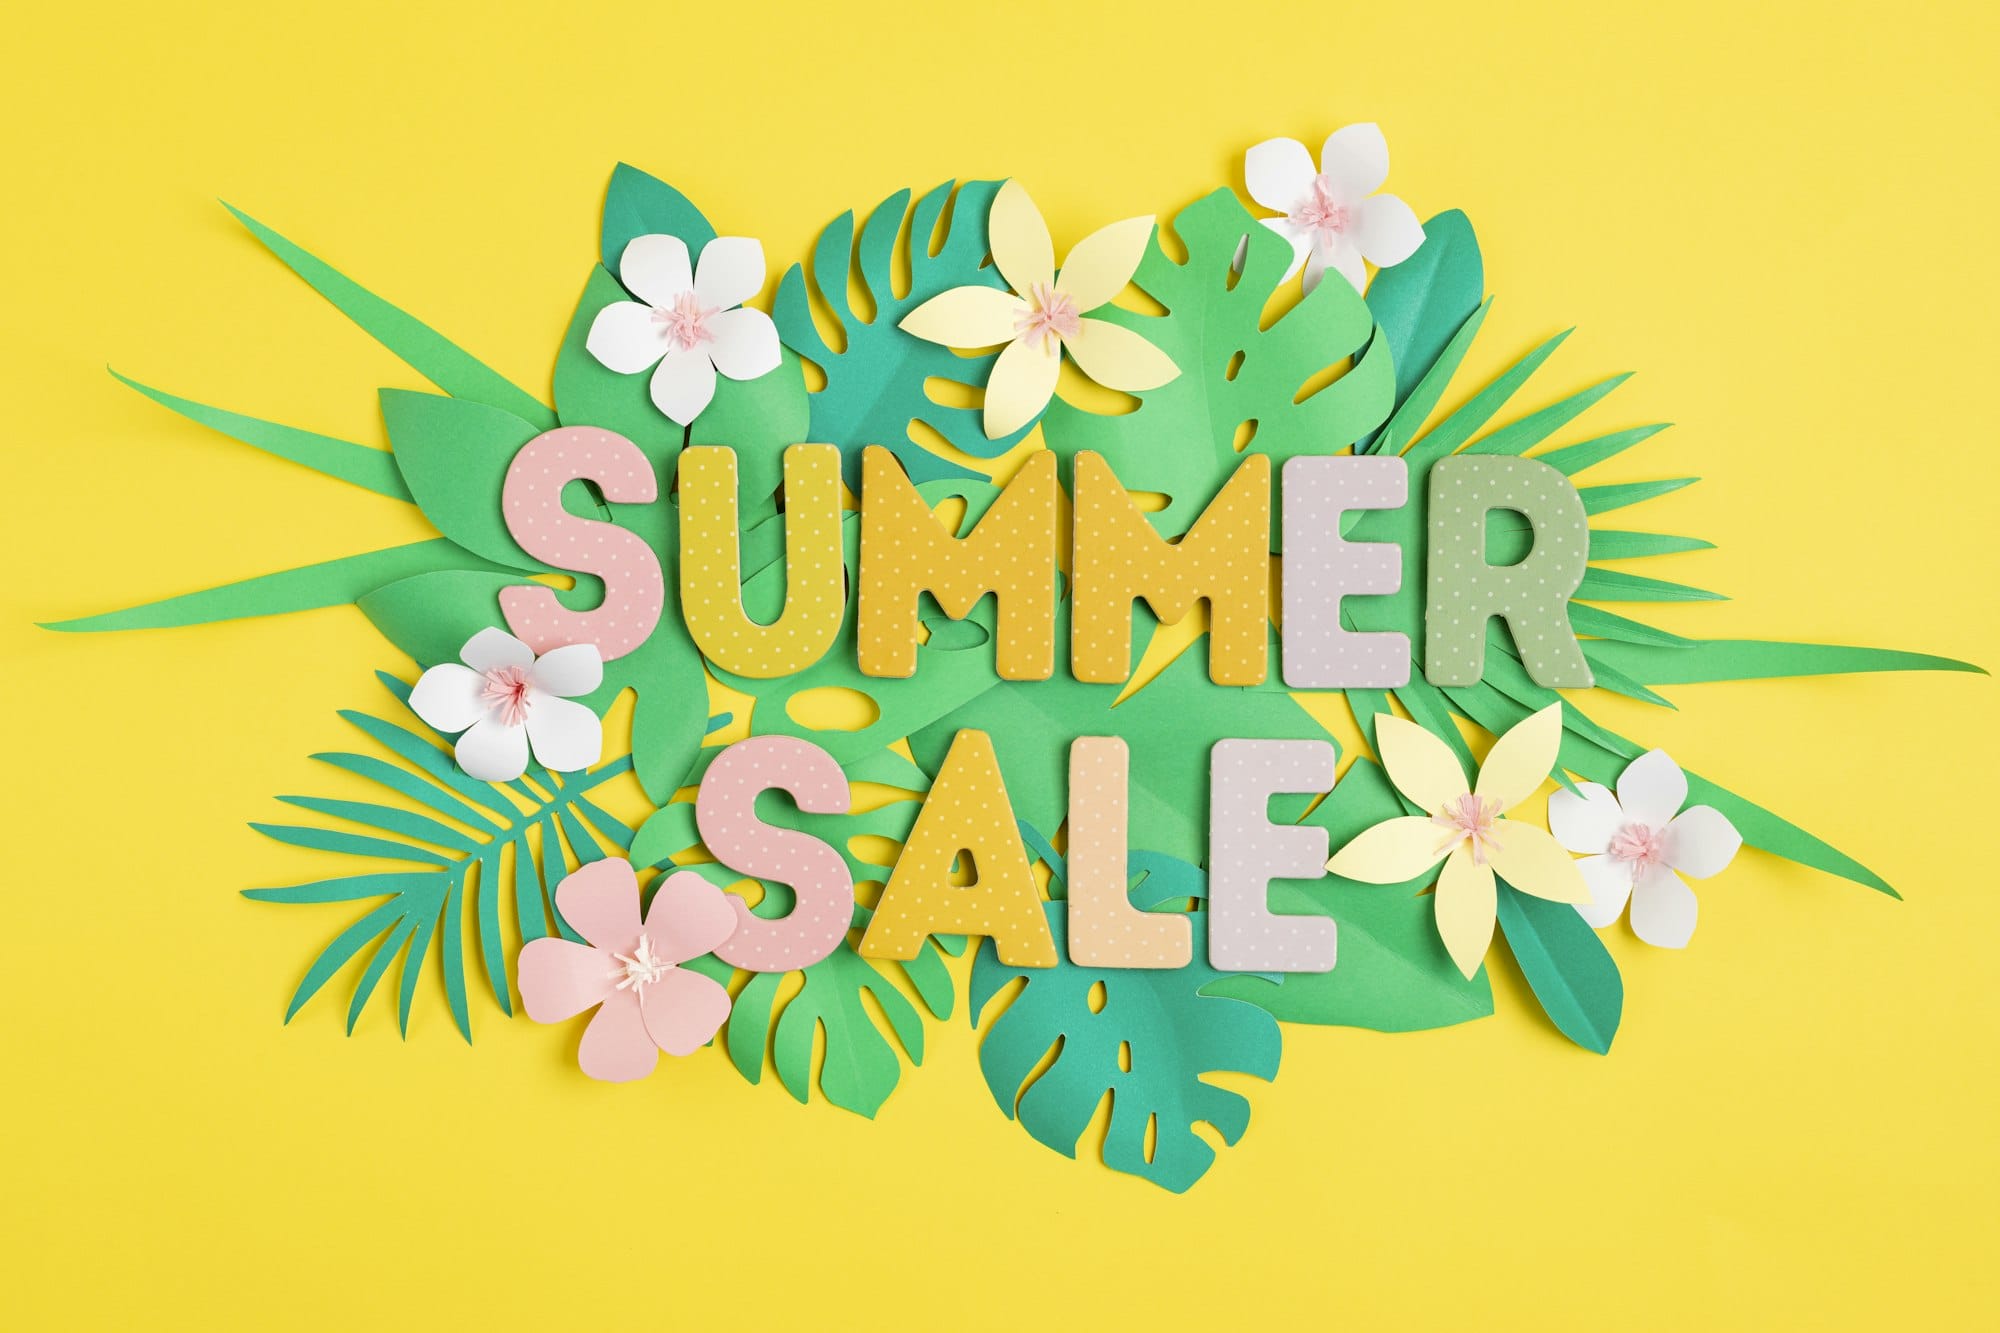 Word Sale over tropical paper cut leaves background. Summer sale, online deals, discounts idea